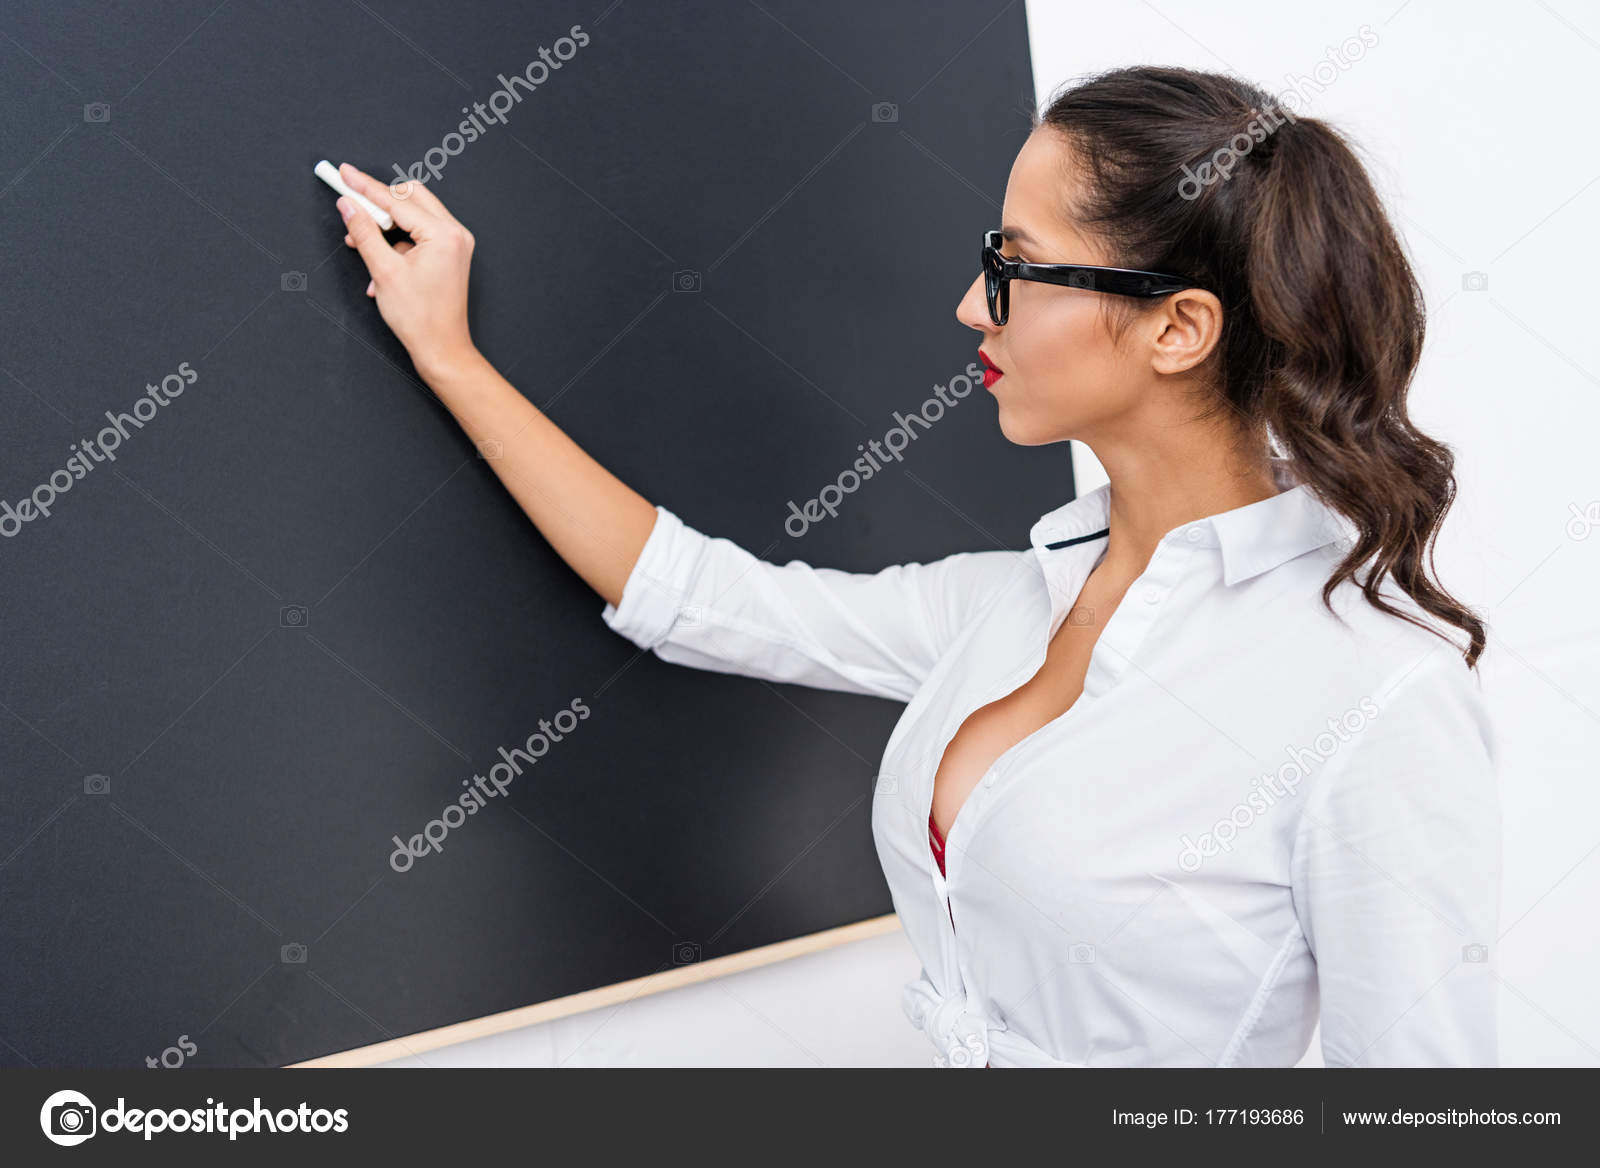 Young Sexy Teacher Writing Blackboard Chalk Stock Photo by ©VitalikRadko  177193686